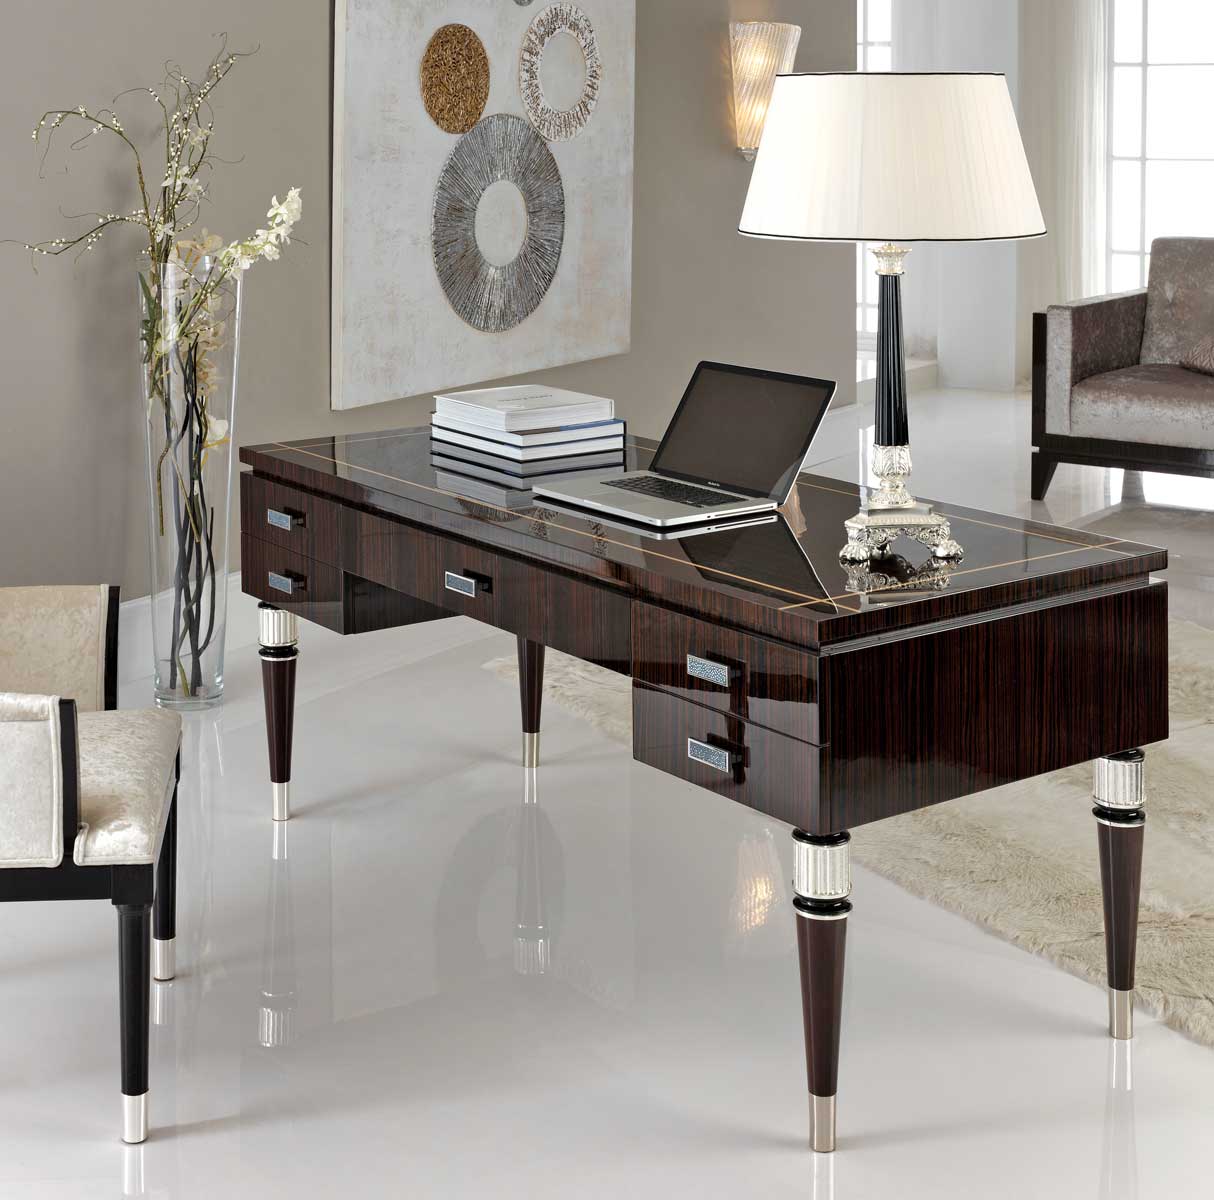 TM-7001 Makassar Ebony Desk – David Michael Furniture